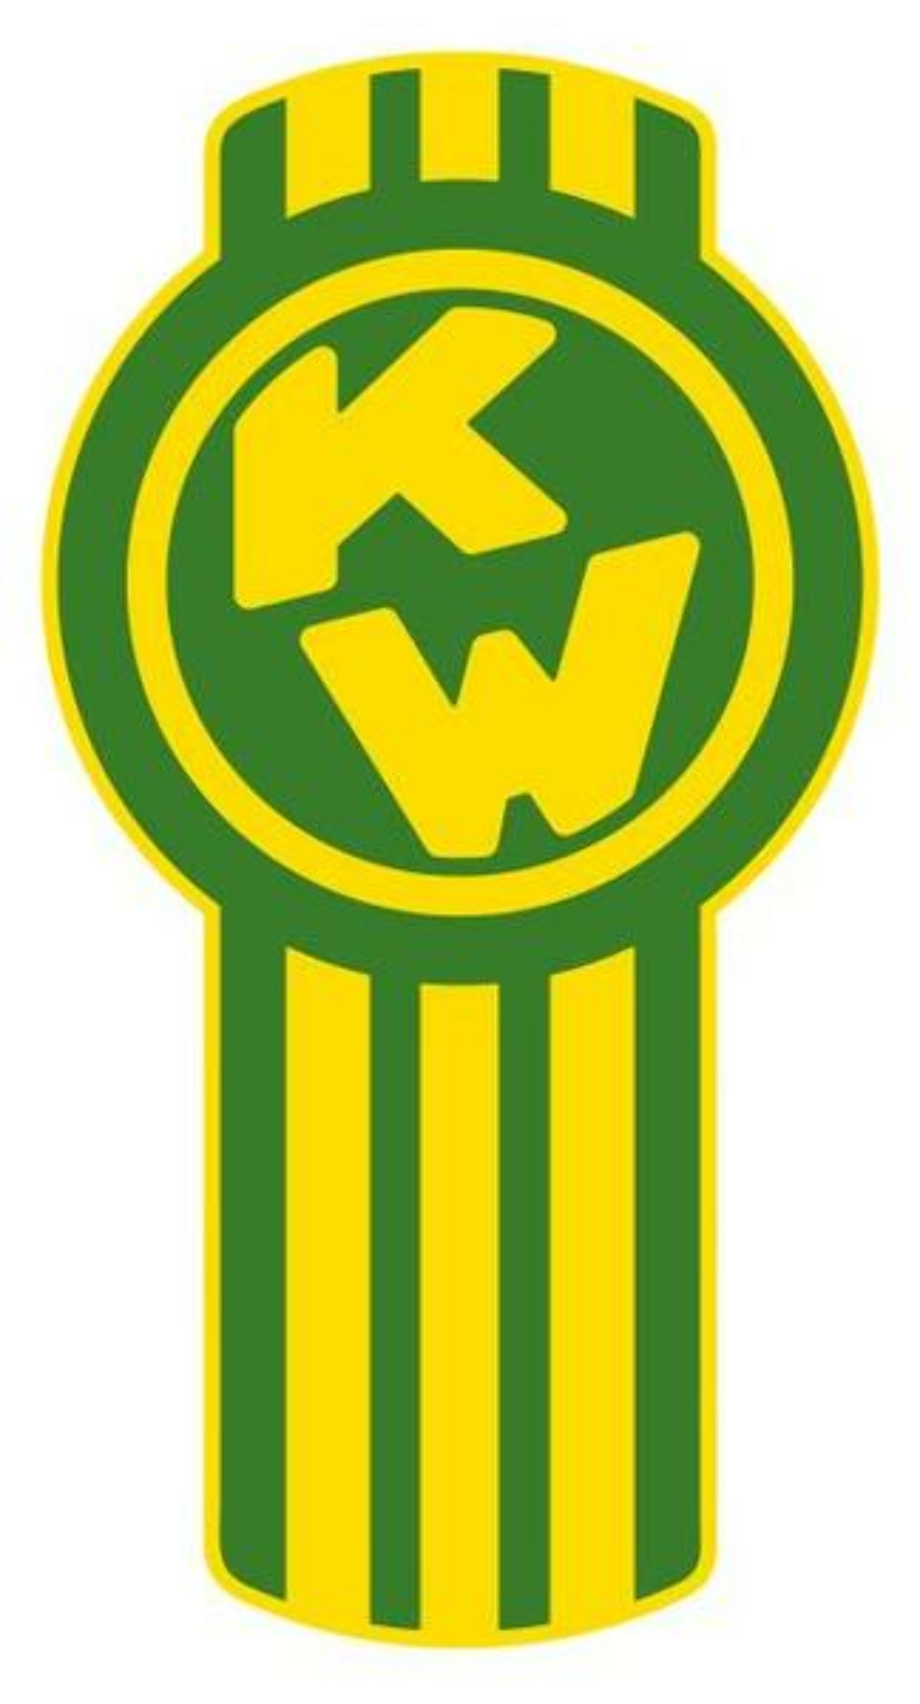 Download High Quality kenworth logo green Transparent PNG Images - Art ...